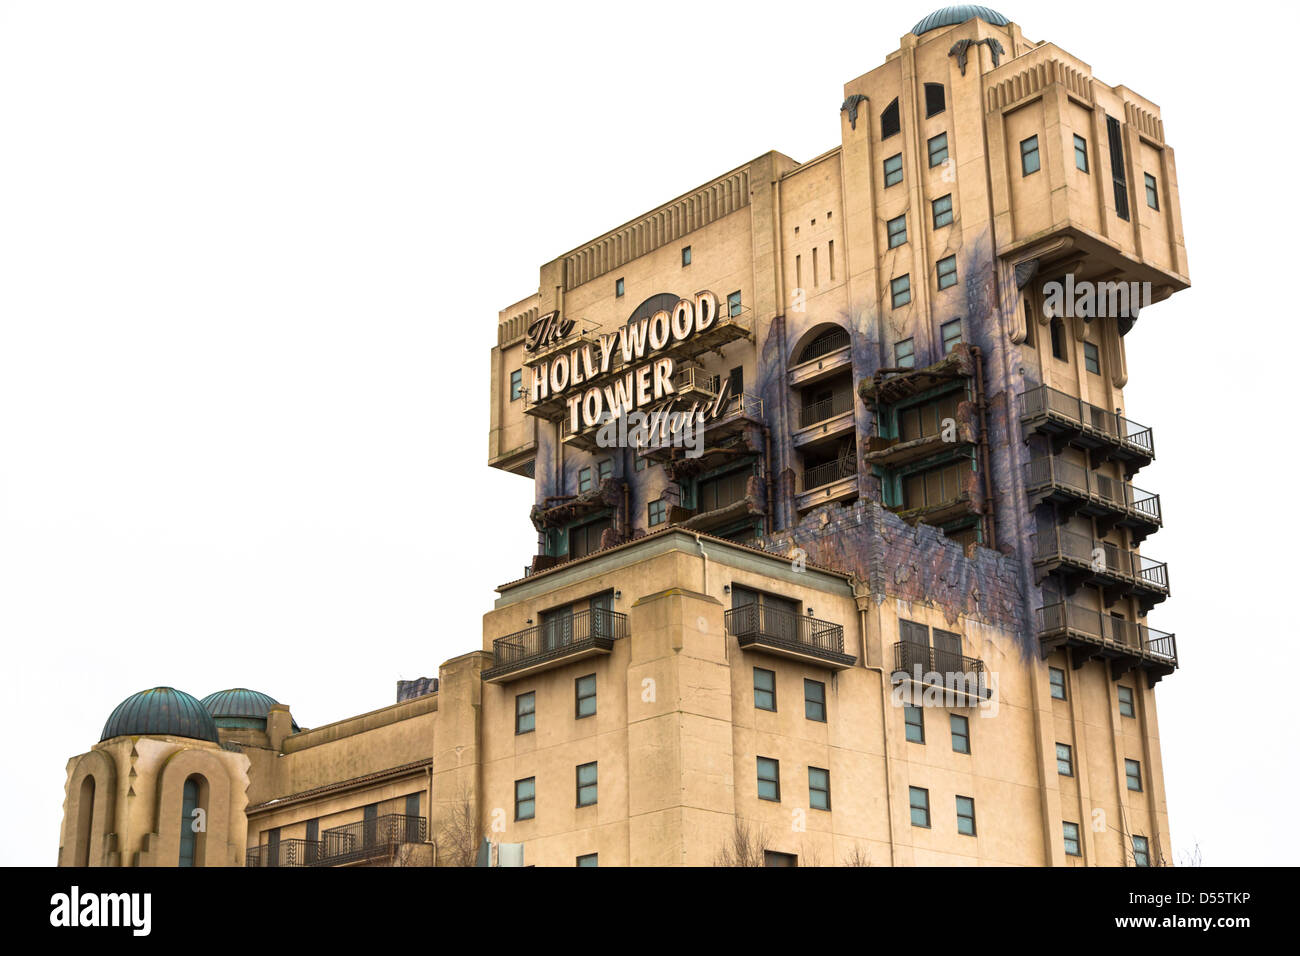 Tower of Terror, Hollywood Tower Hotel, Disneyland Paris Stock Photo